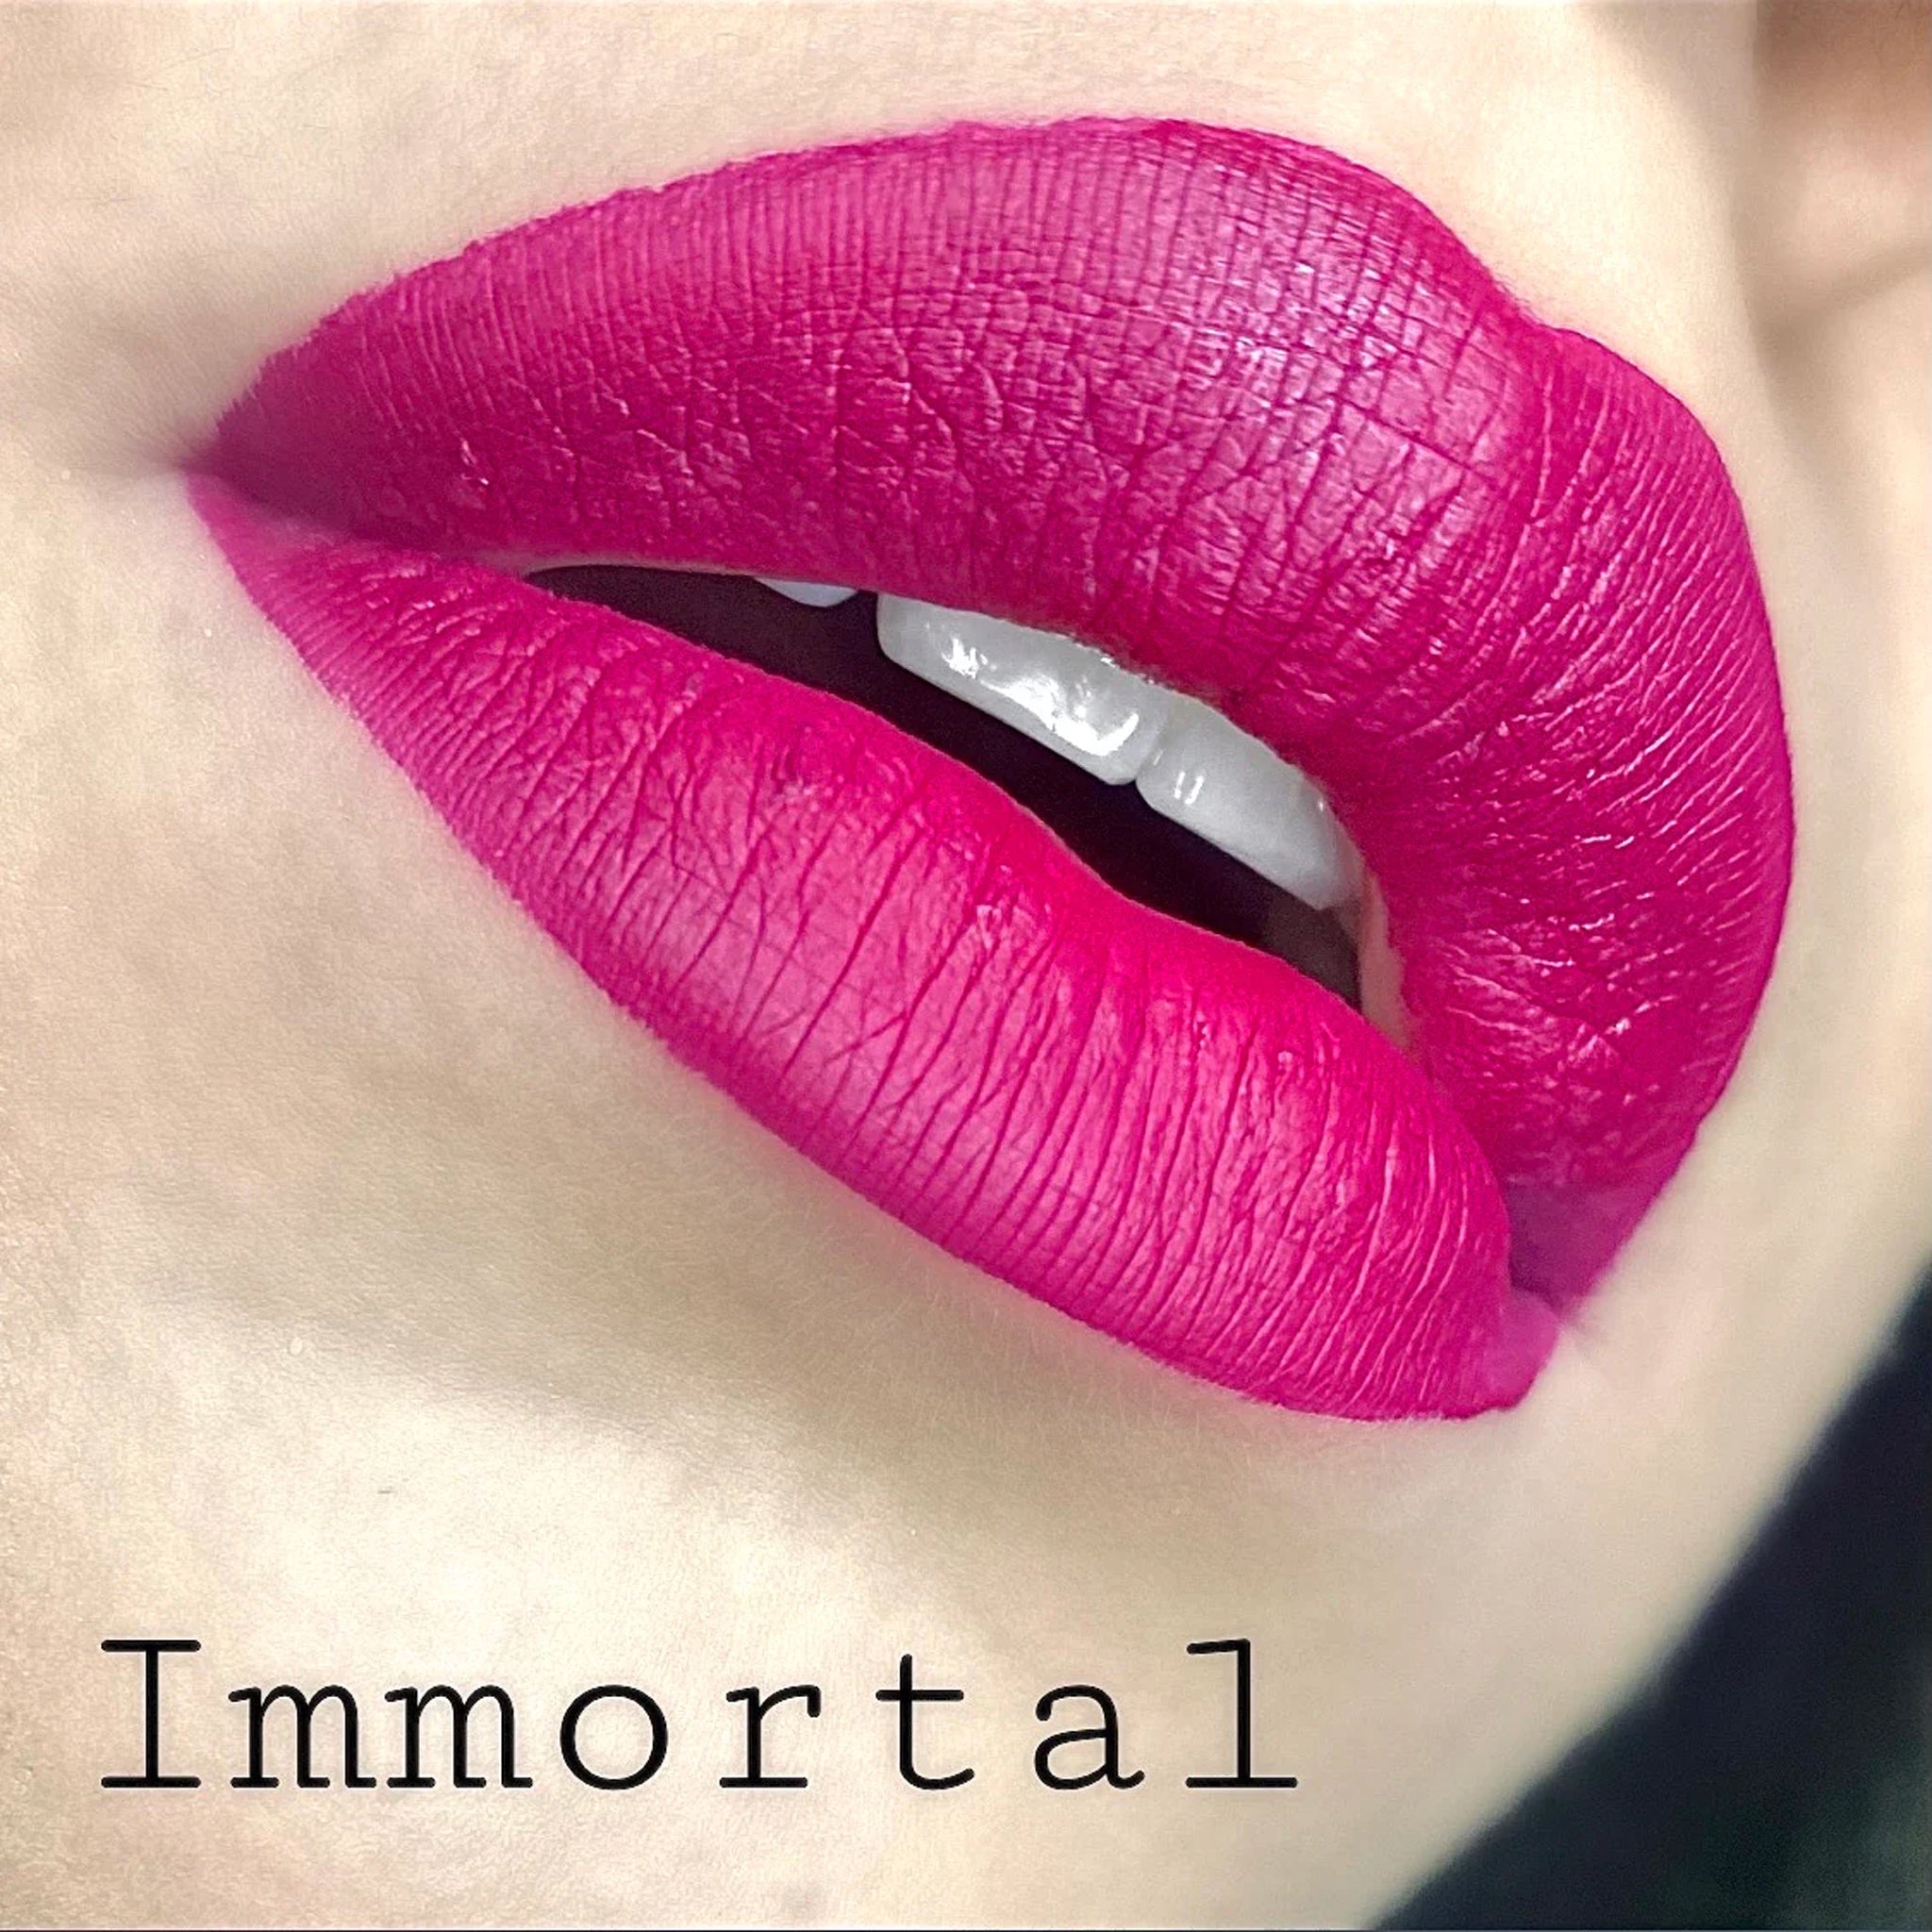 Imperishable Liquid Lipsticks immortal